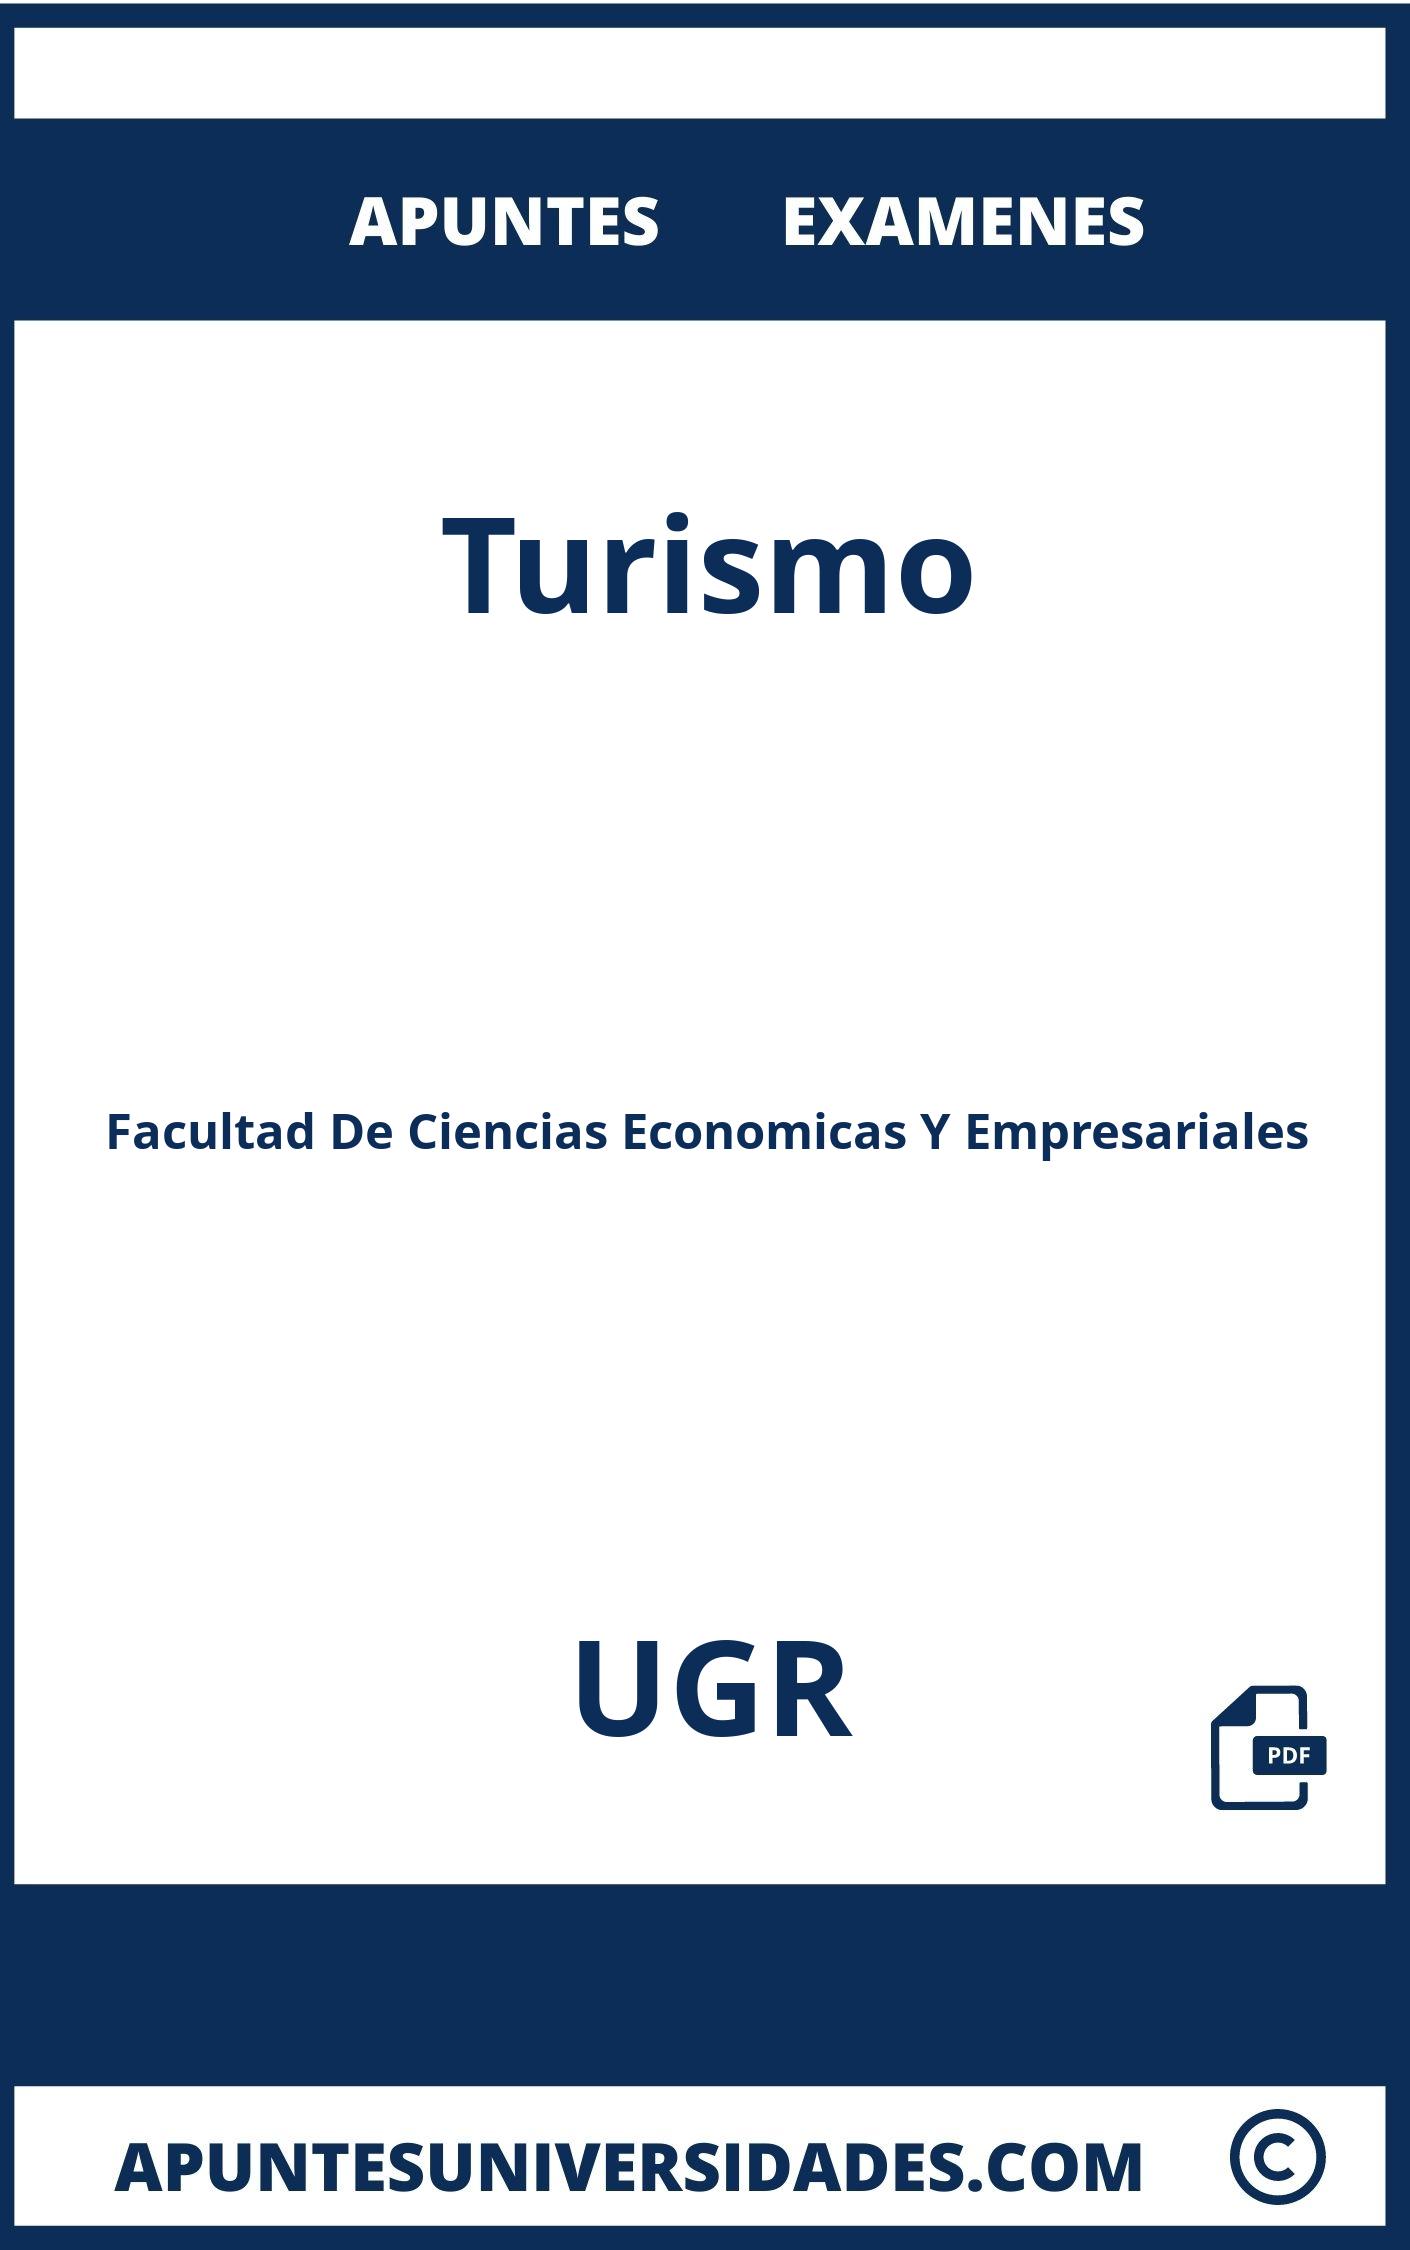 Turismo UGR Examenes Apuntes